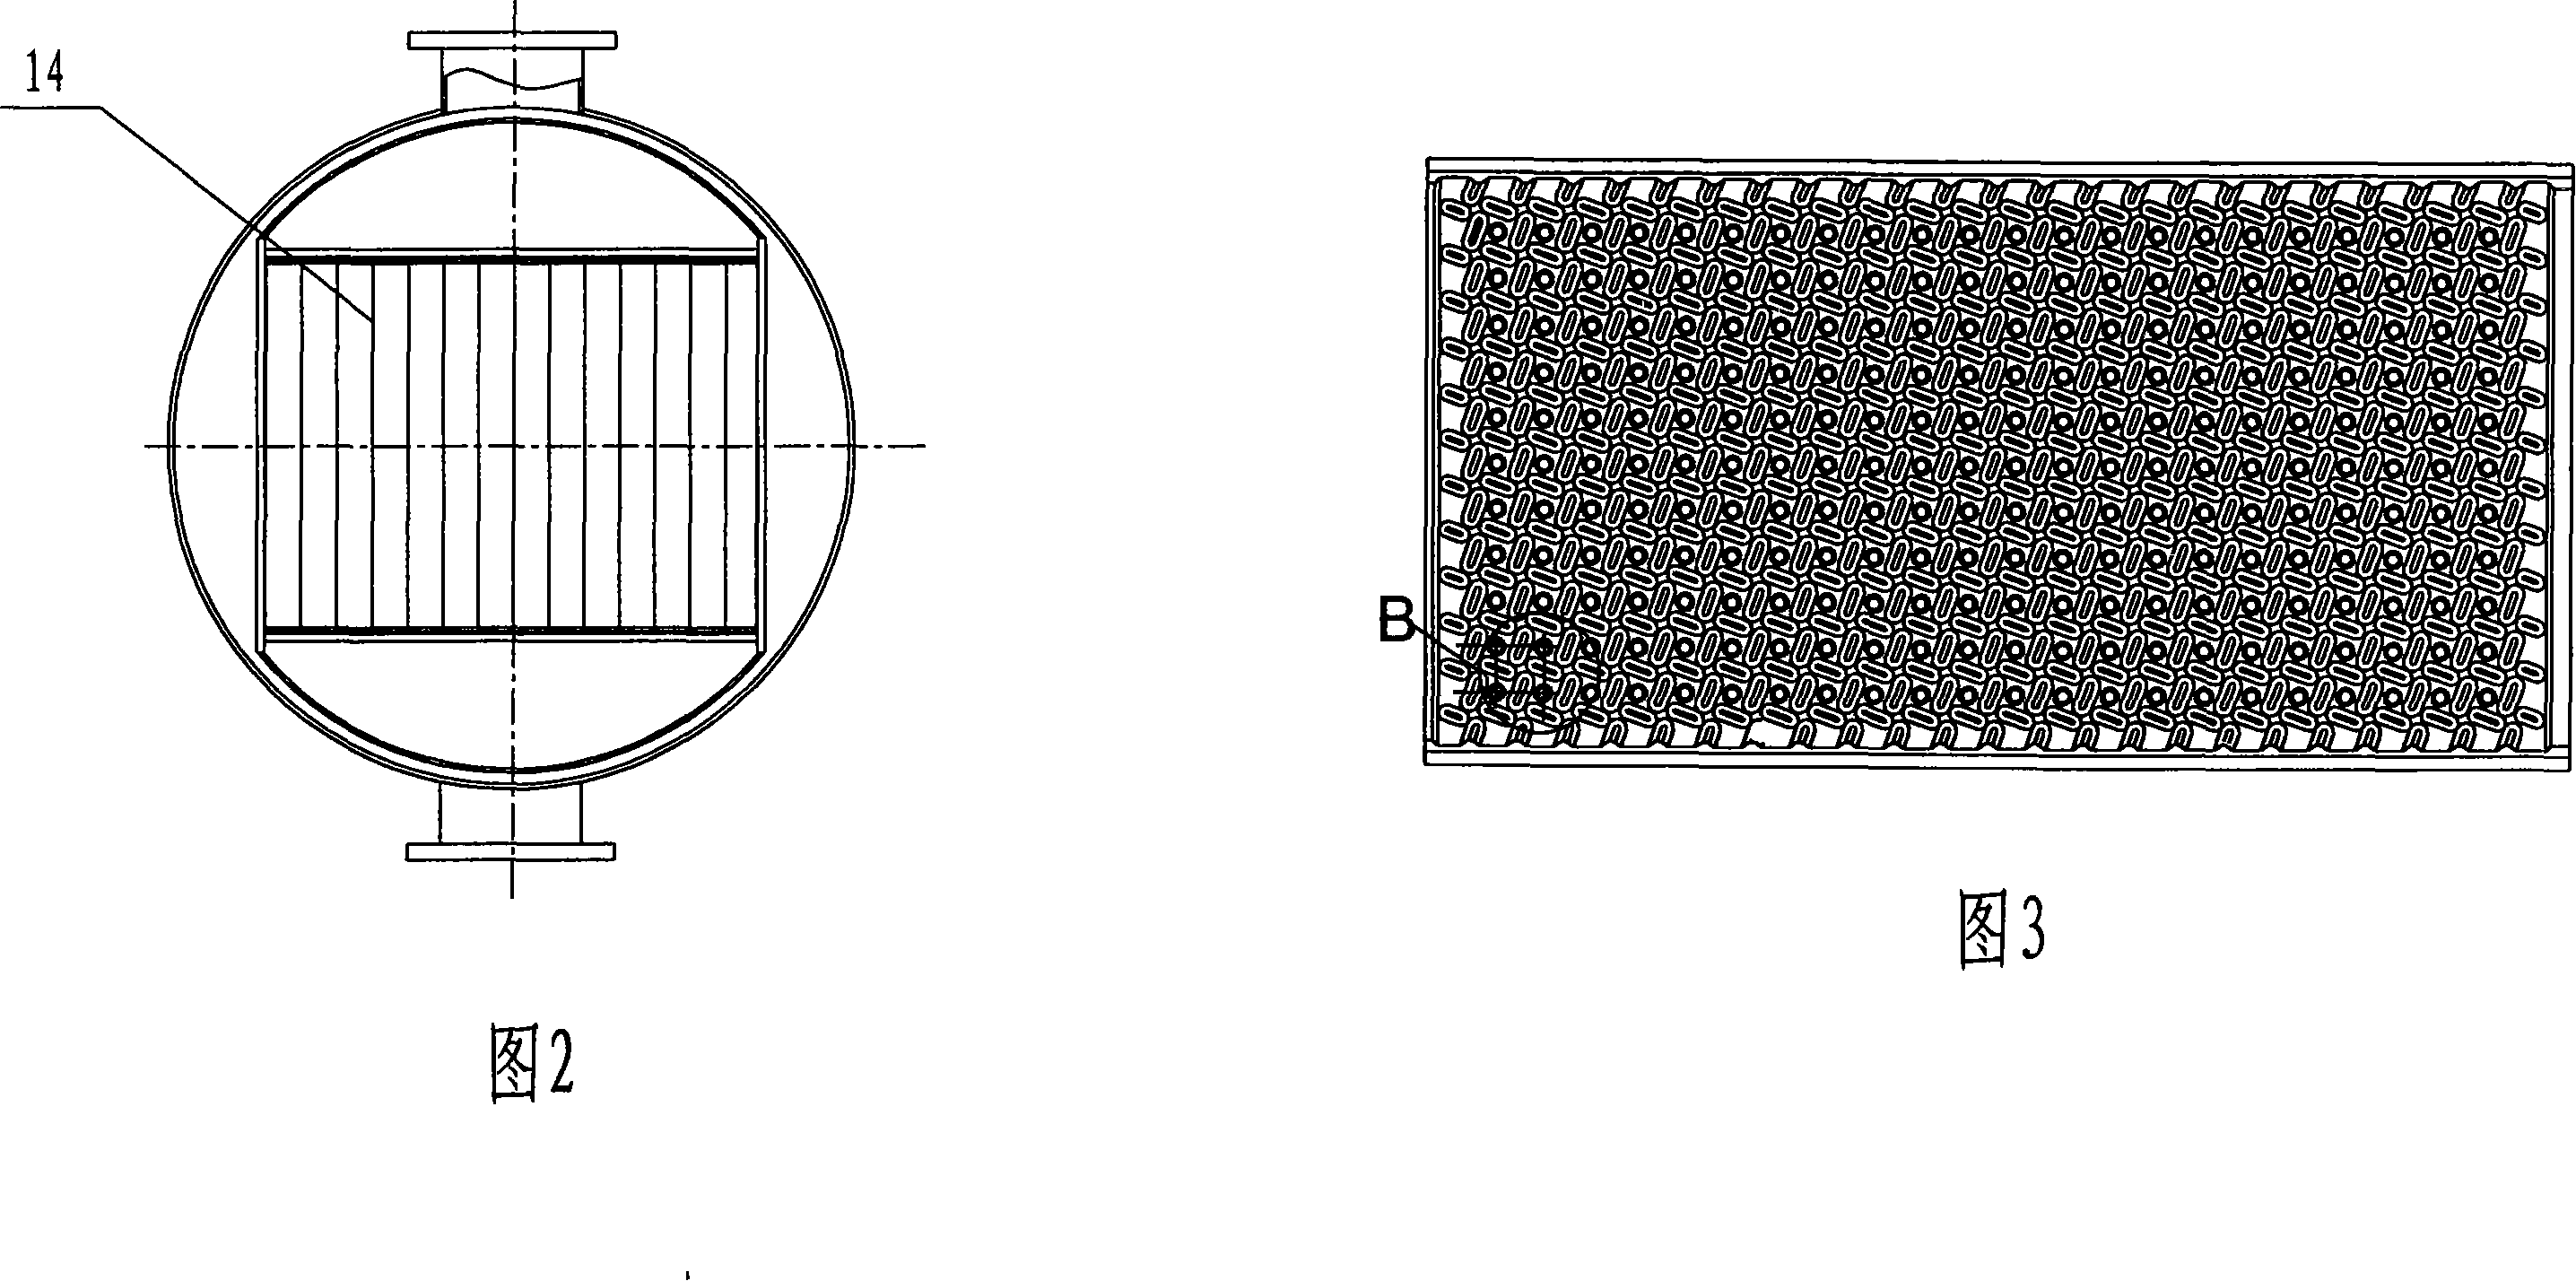 Plate-shell heat exchanger